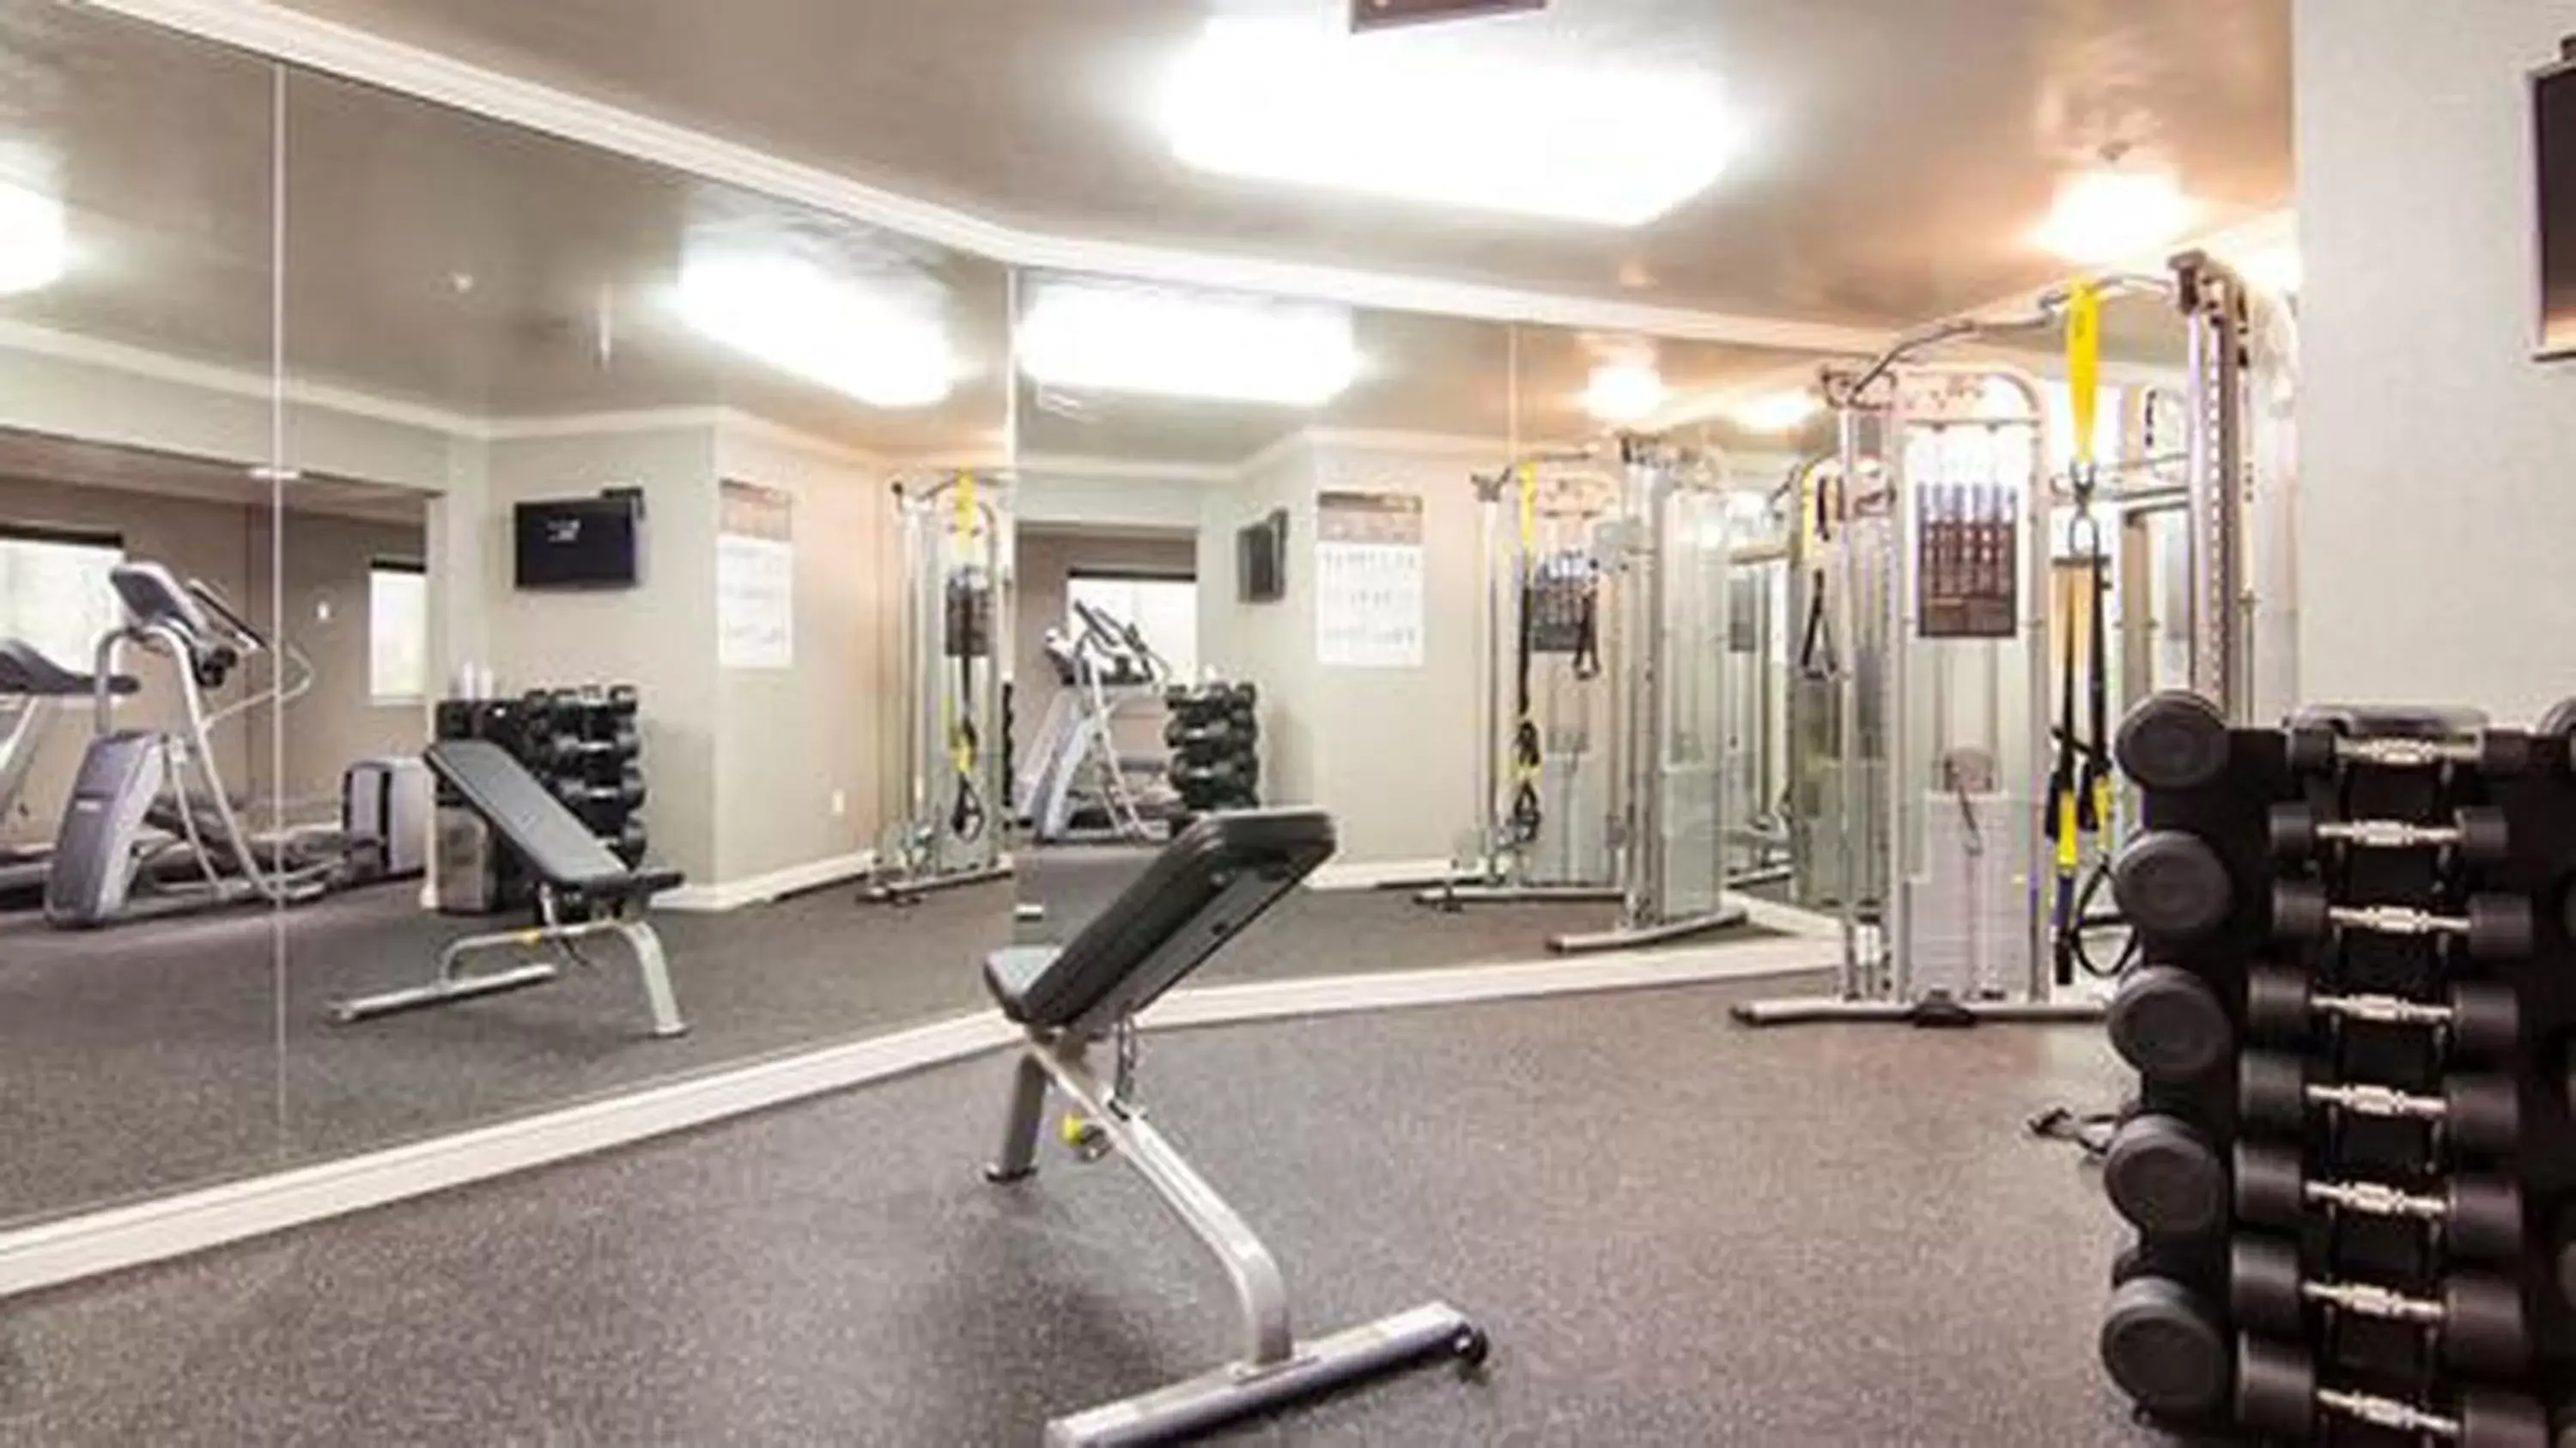 Fitness centre/facilities, Fitness Center/Facilities in The Zen Hotel Palo Alto